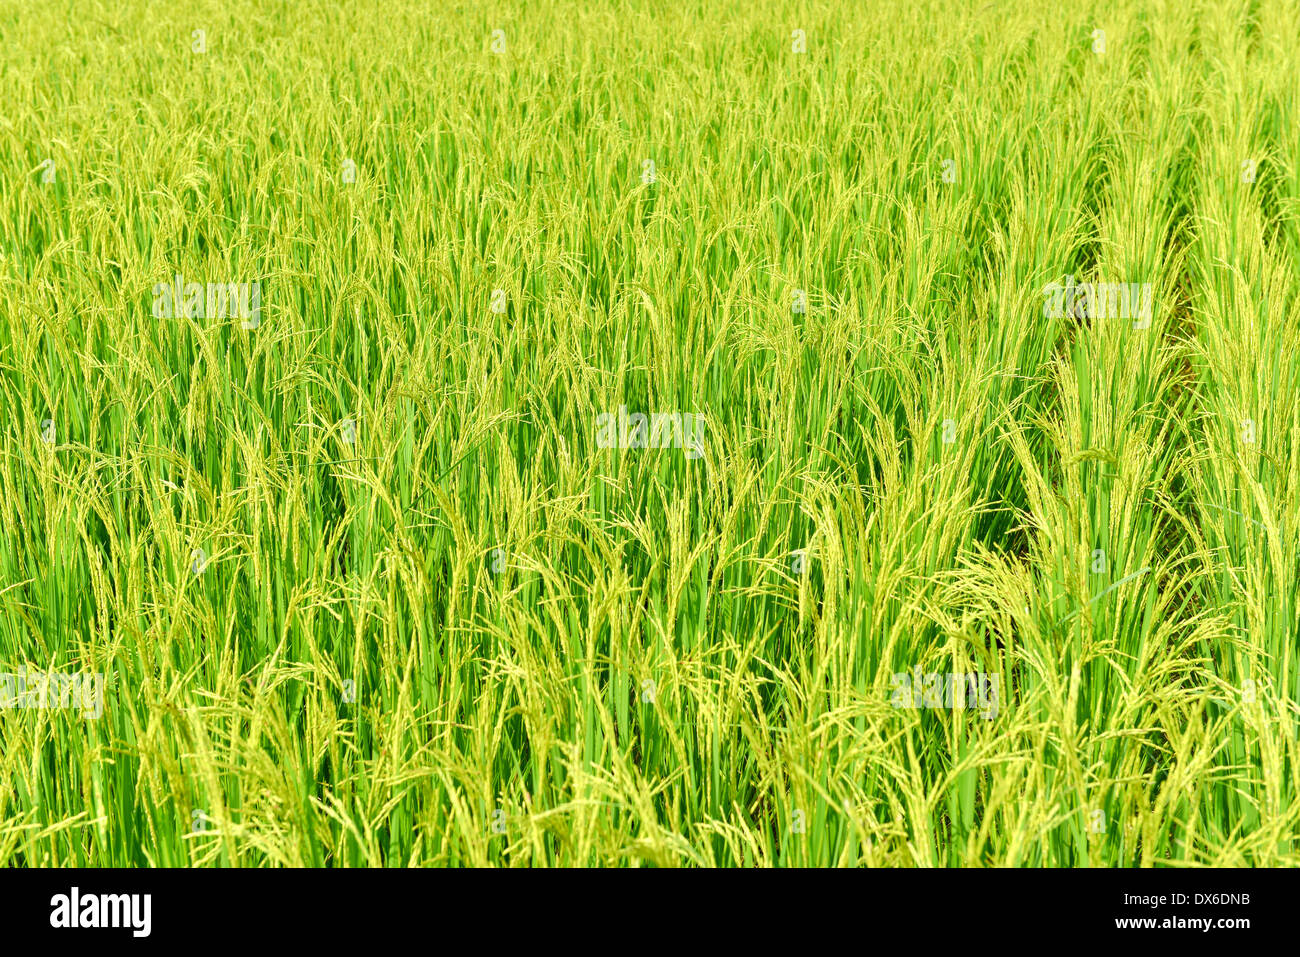 Rice paddy fields, Thailand Stock Photo